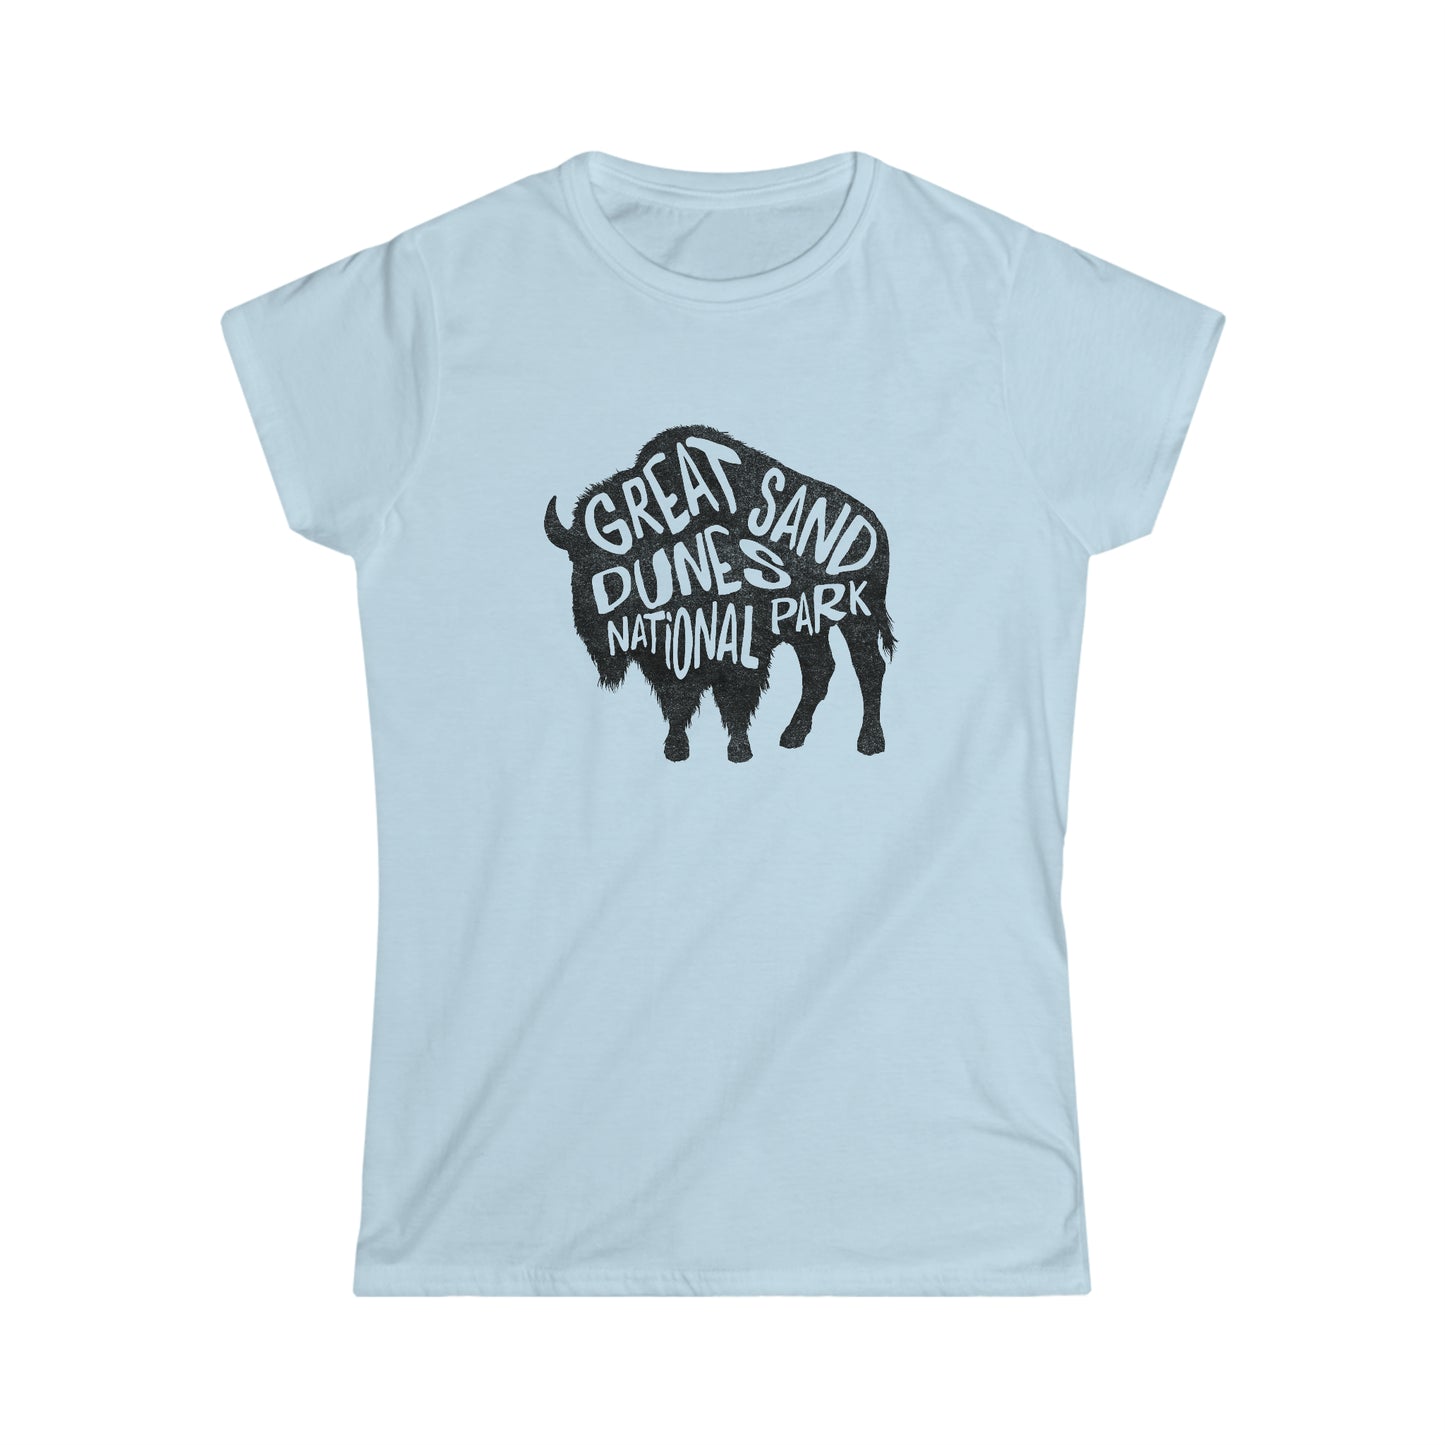 Great Sand Dunes National Park Women's T-Shirt - Bison